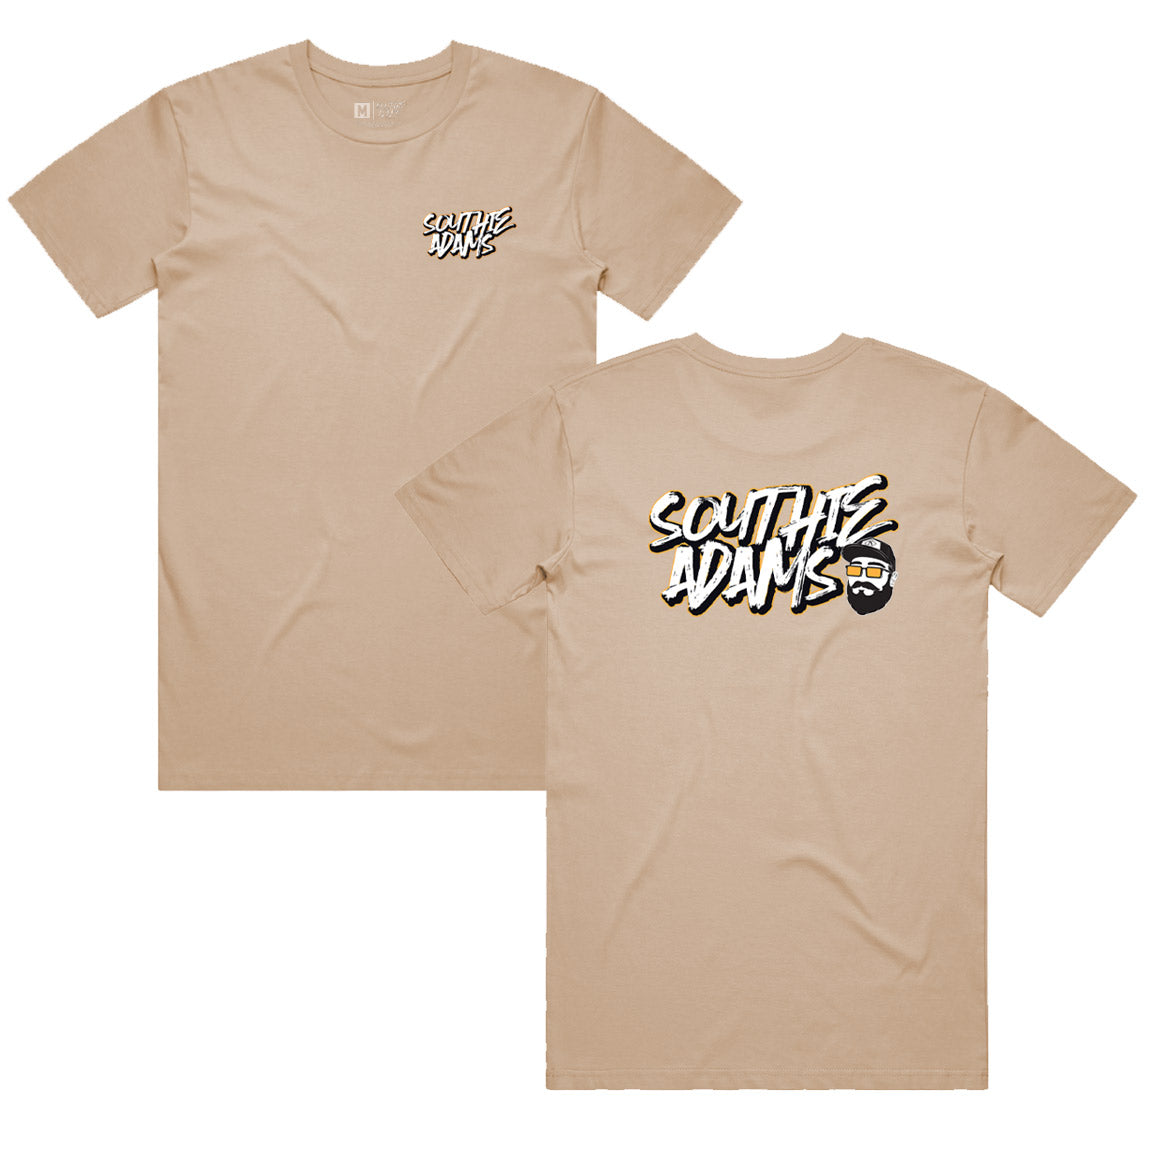 Southie Adams - Logo - T-Shirt (Tan)